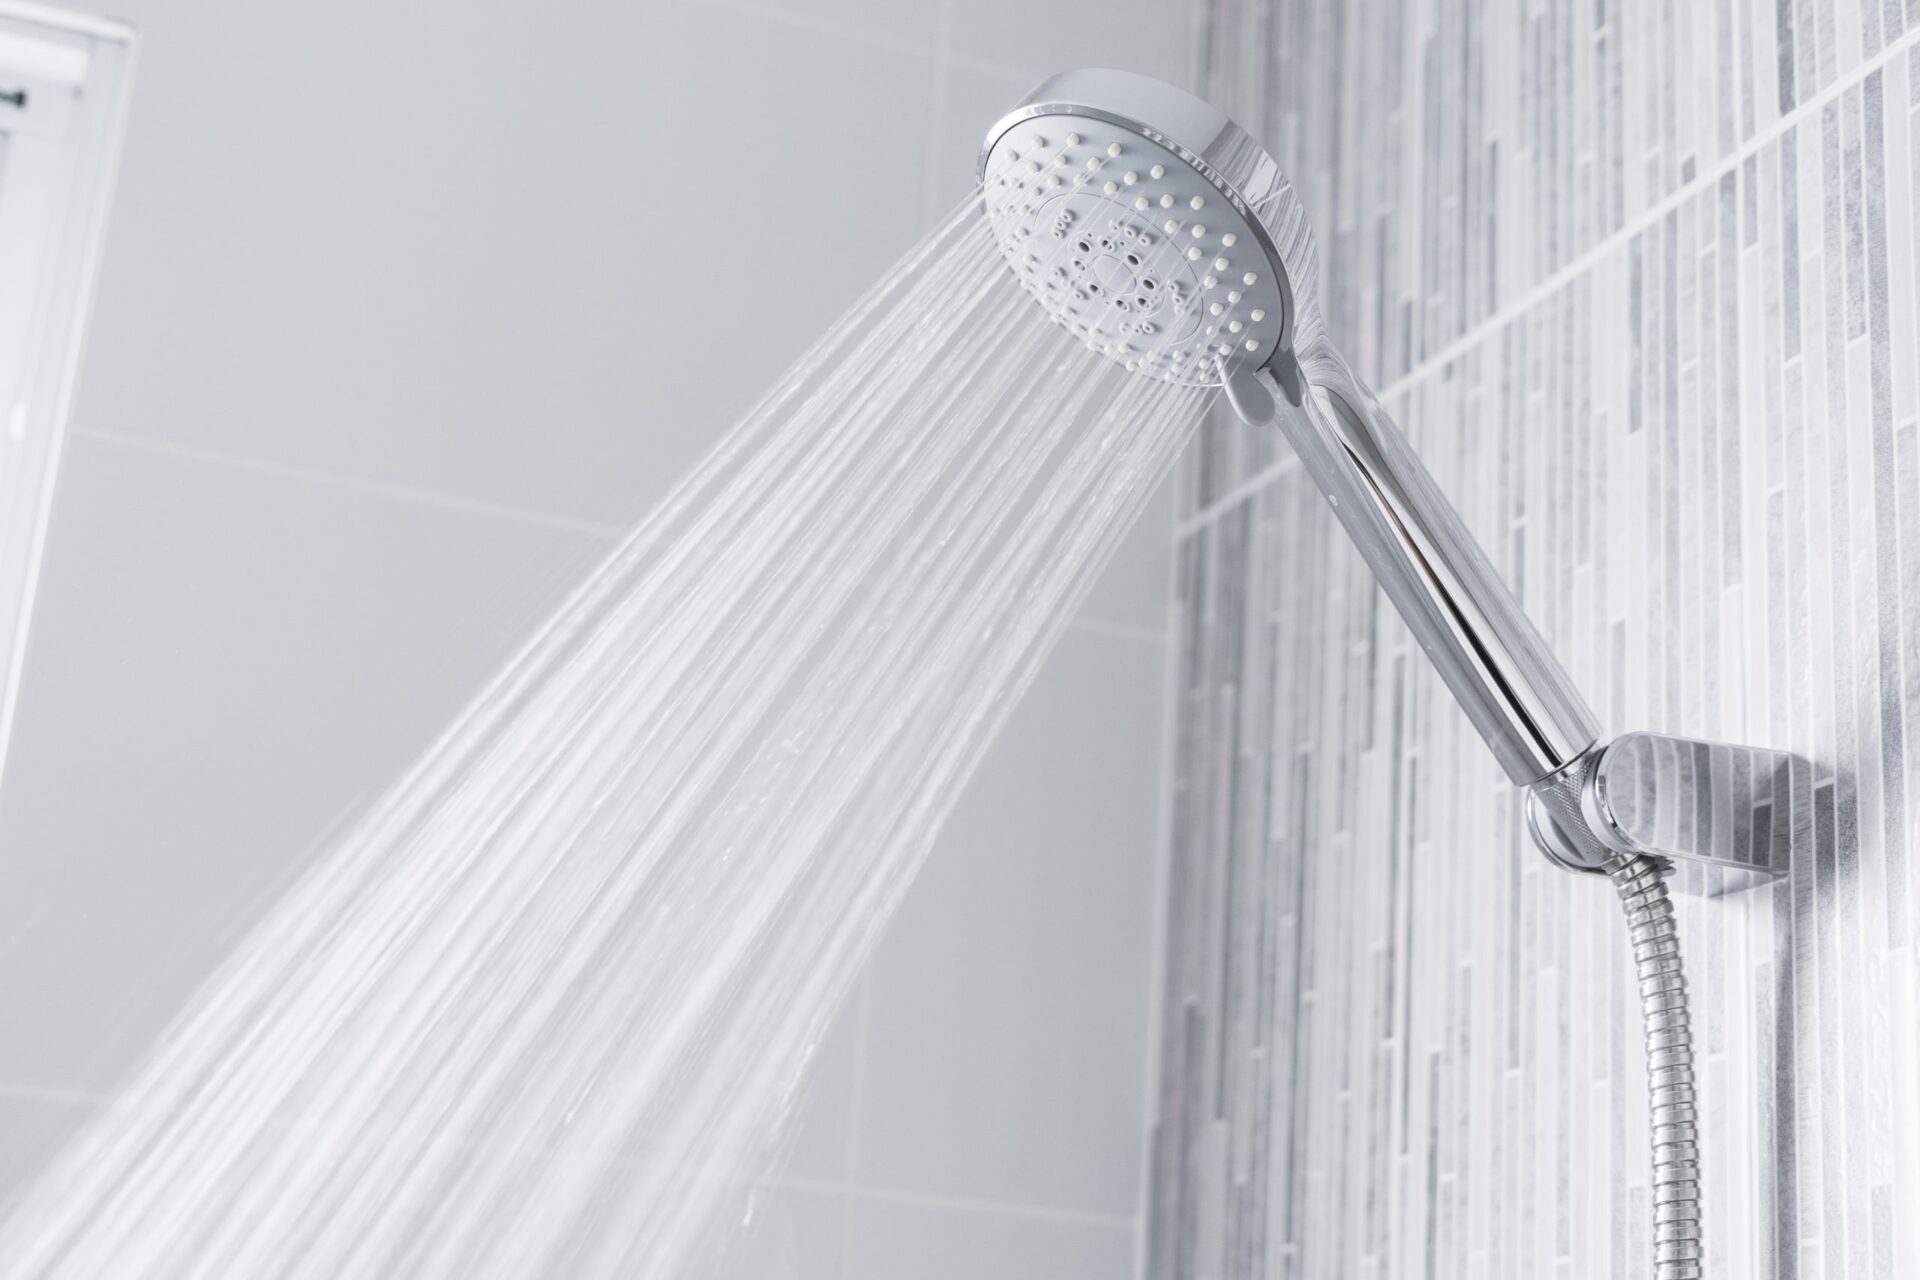 Bathroom shower head spraying water